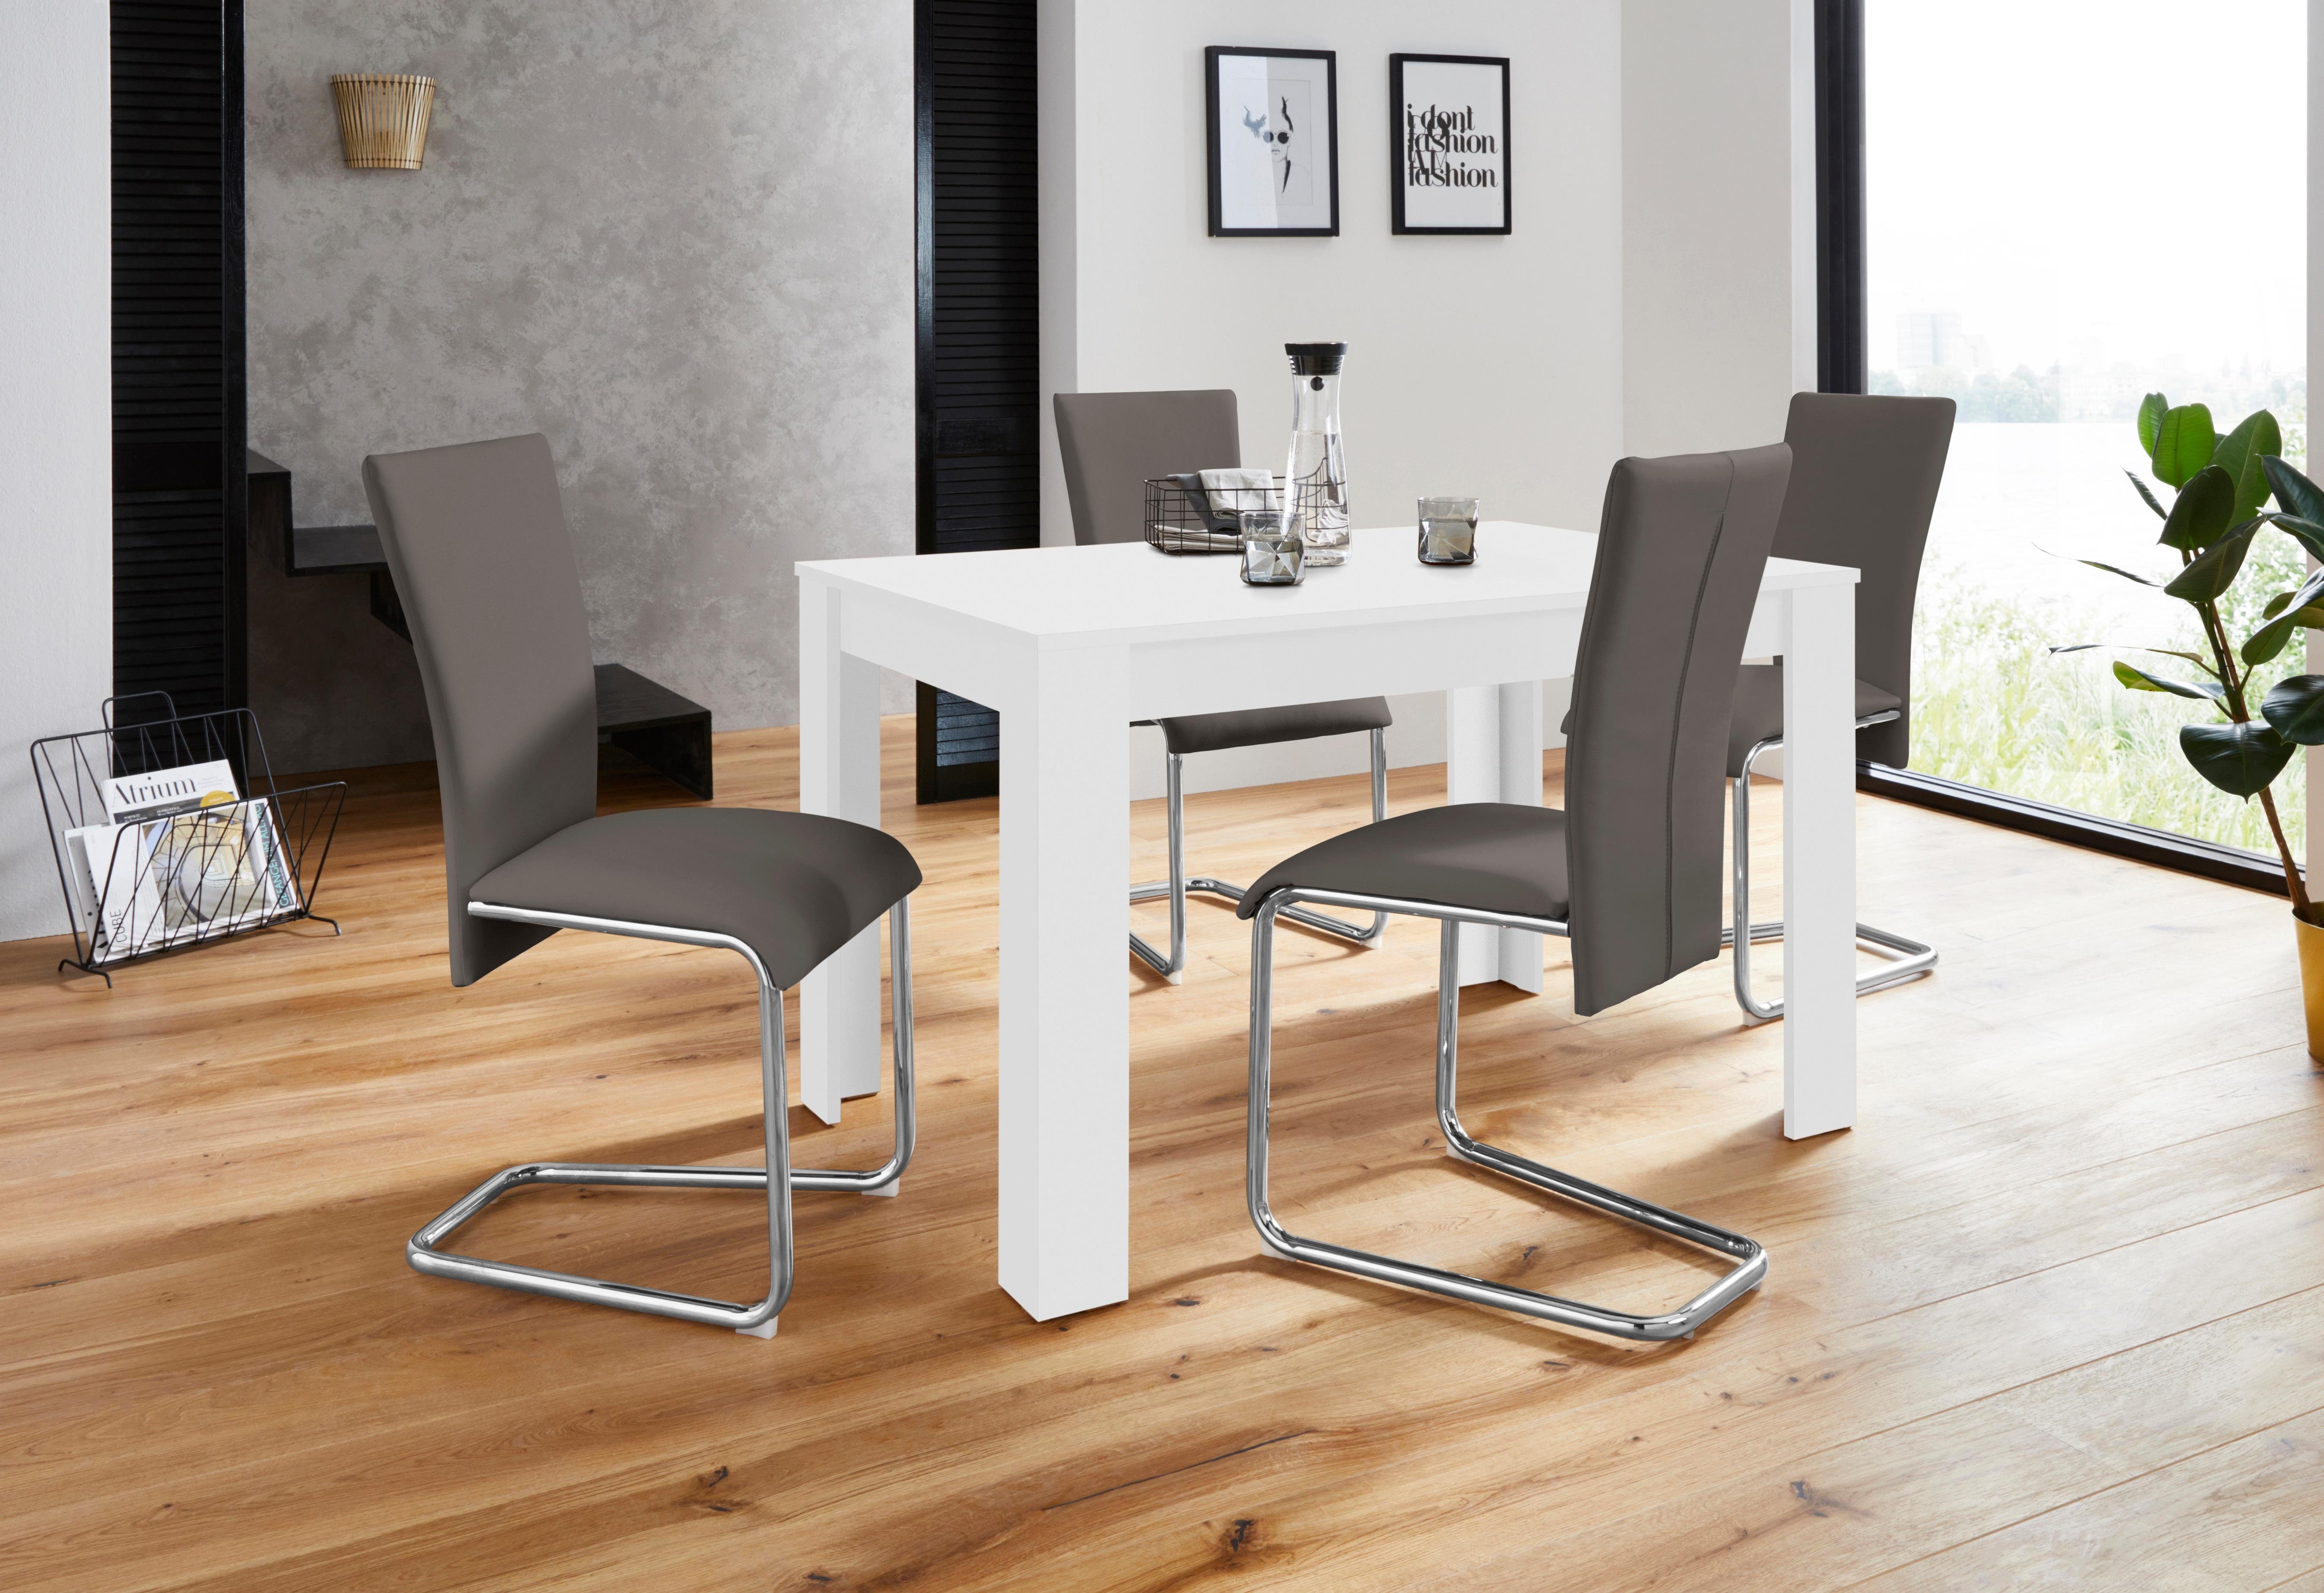 Homexperts Eethoek Nick2-Mulan met 4 stoelen, tafel in wit, breedte 120 cm (set, 5-delig)